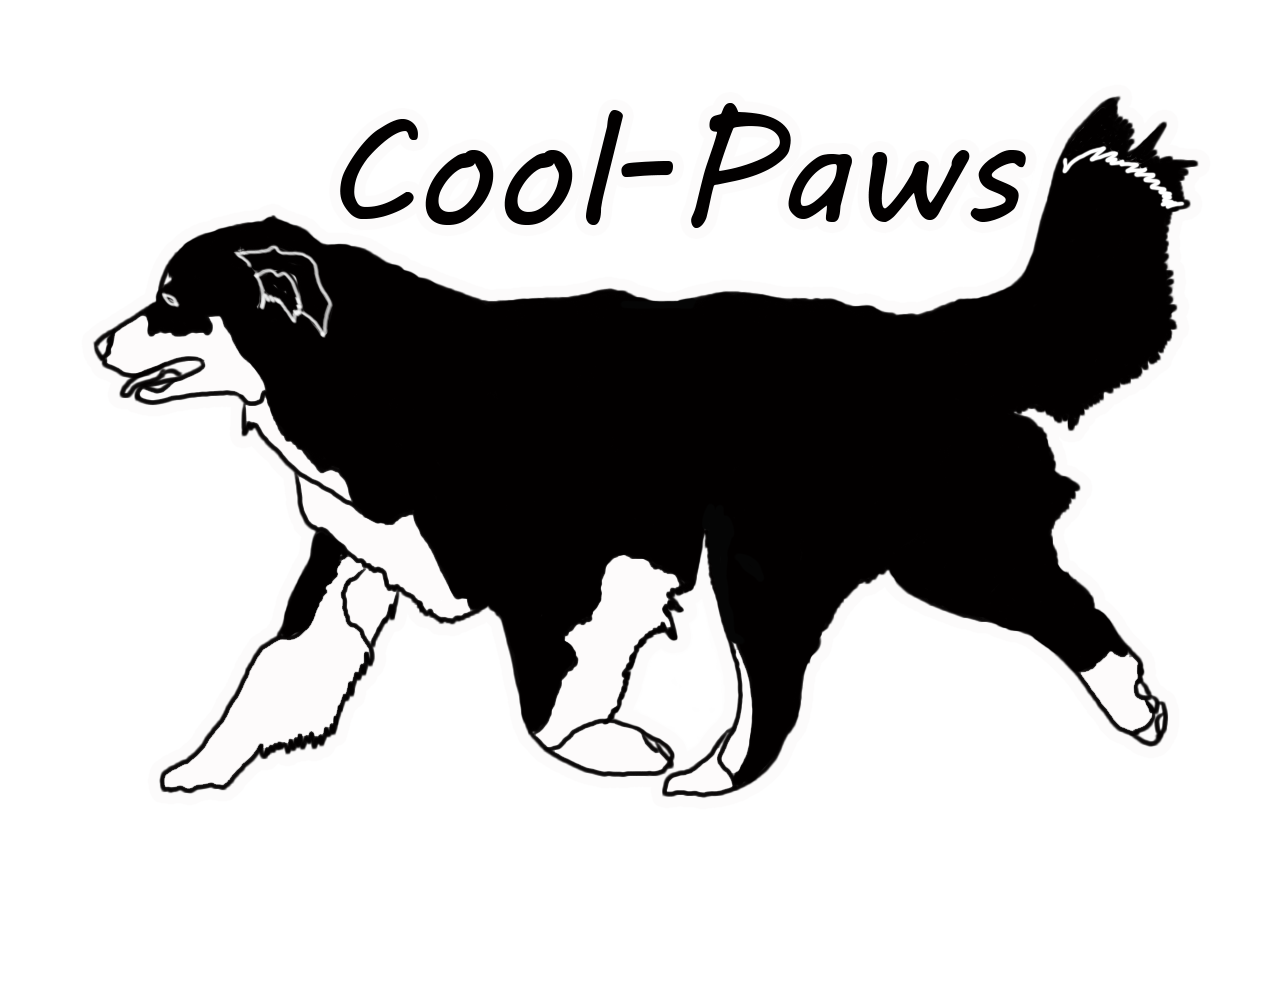 Cool-Paws logo